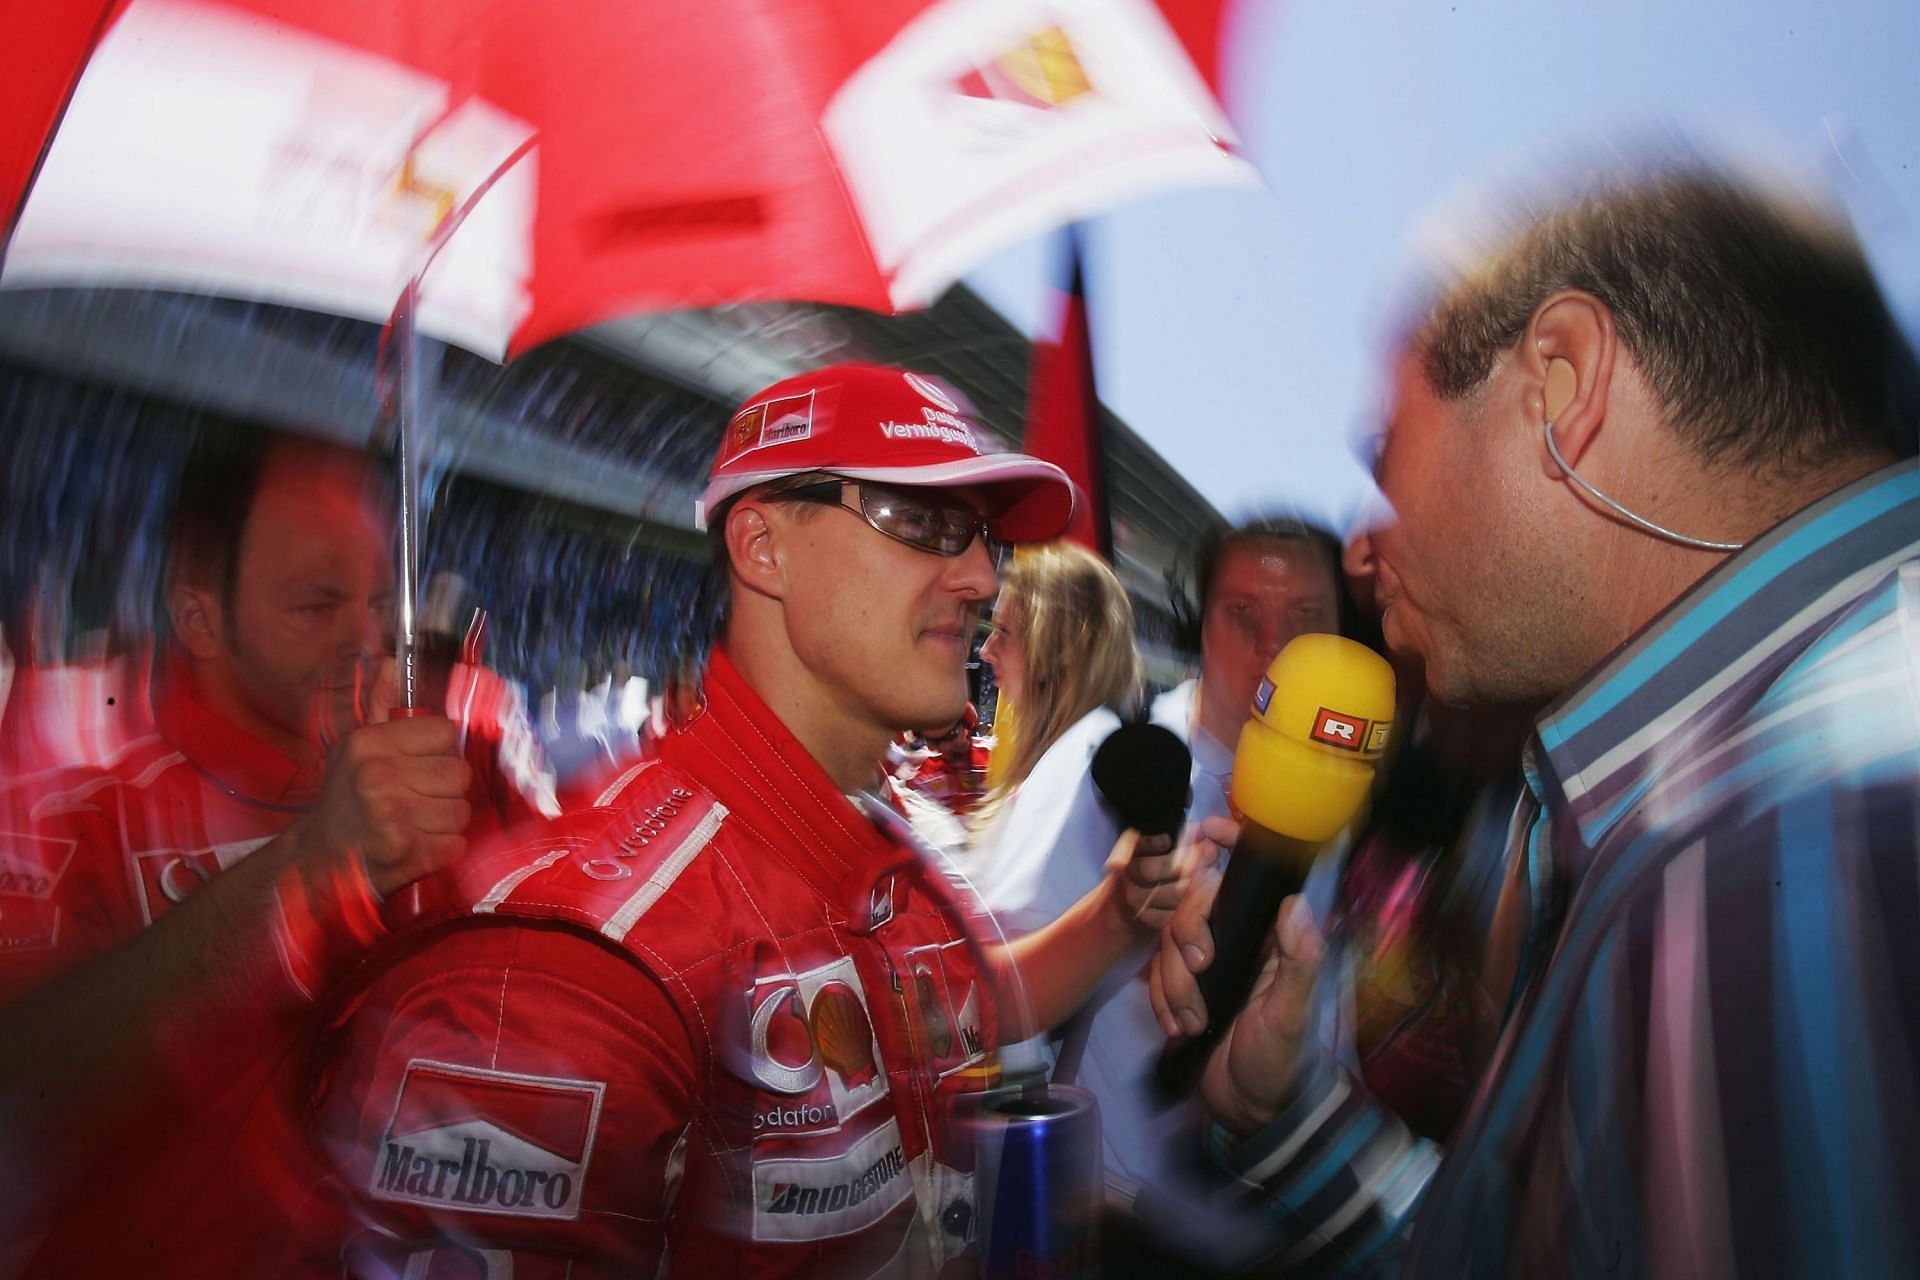 Michael Schumacher is a seven-time F1 world champion